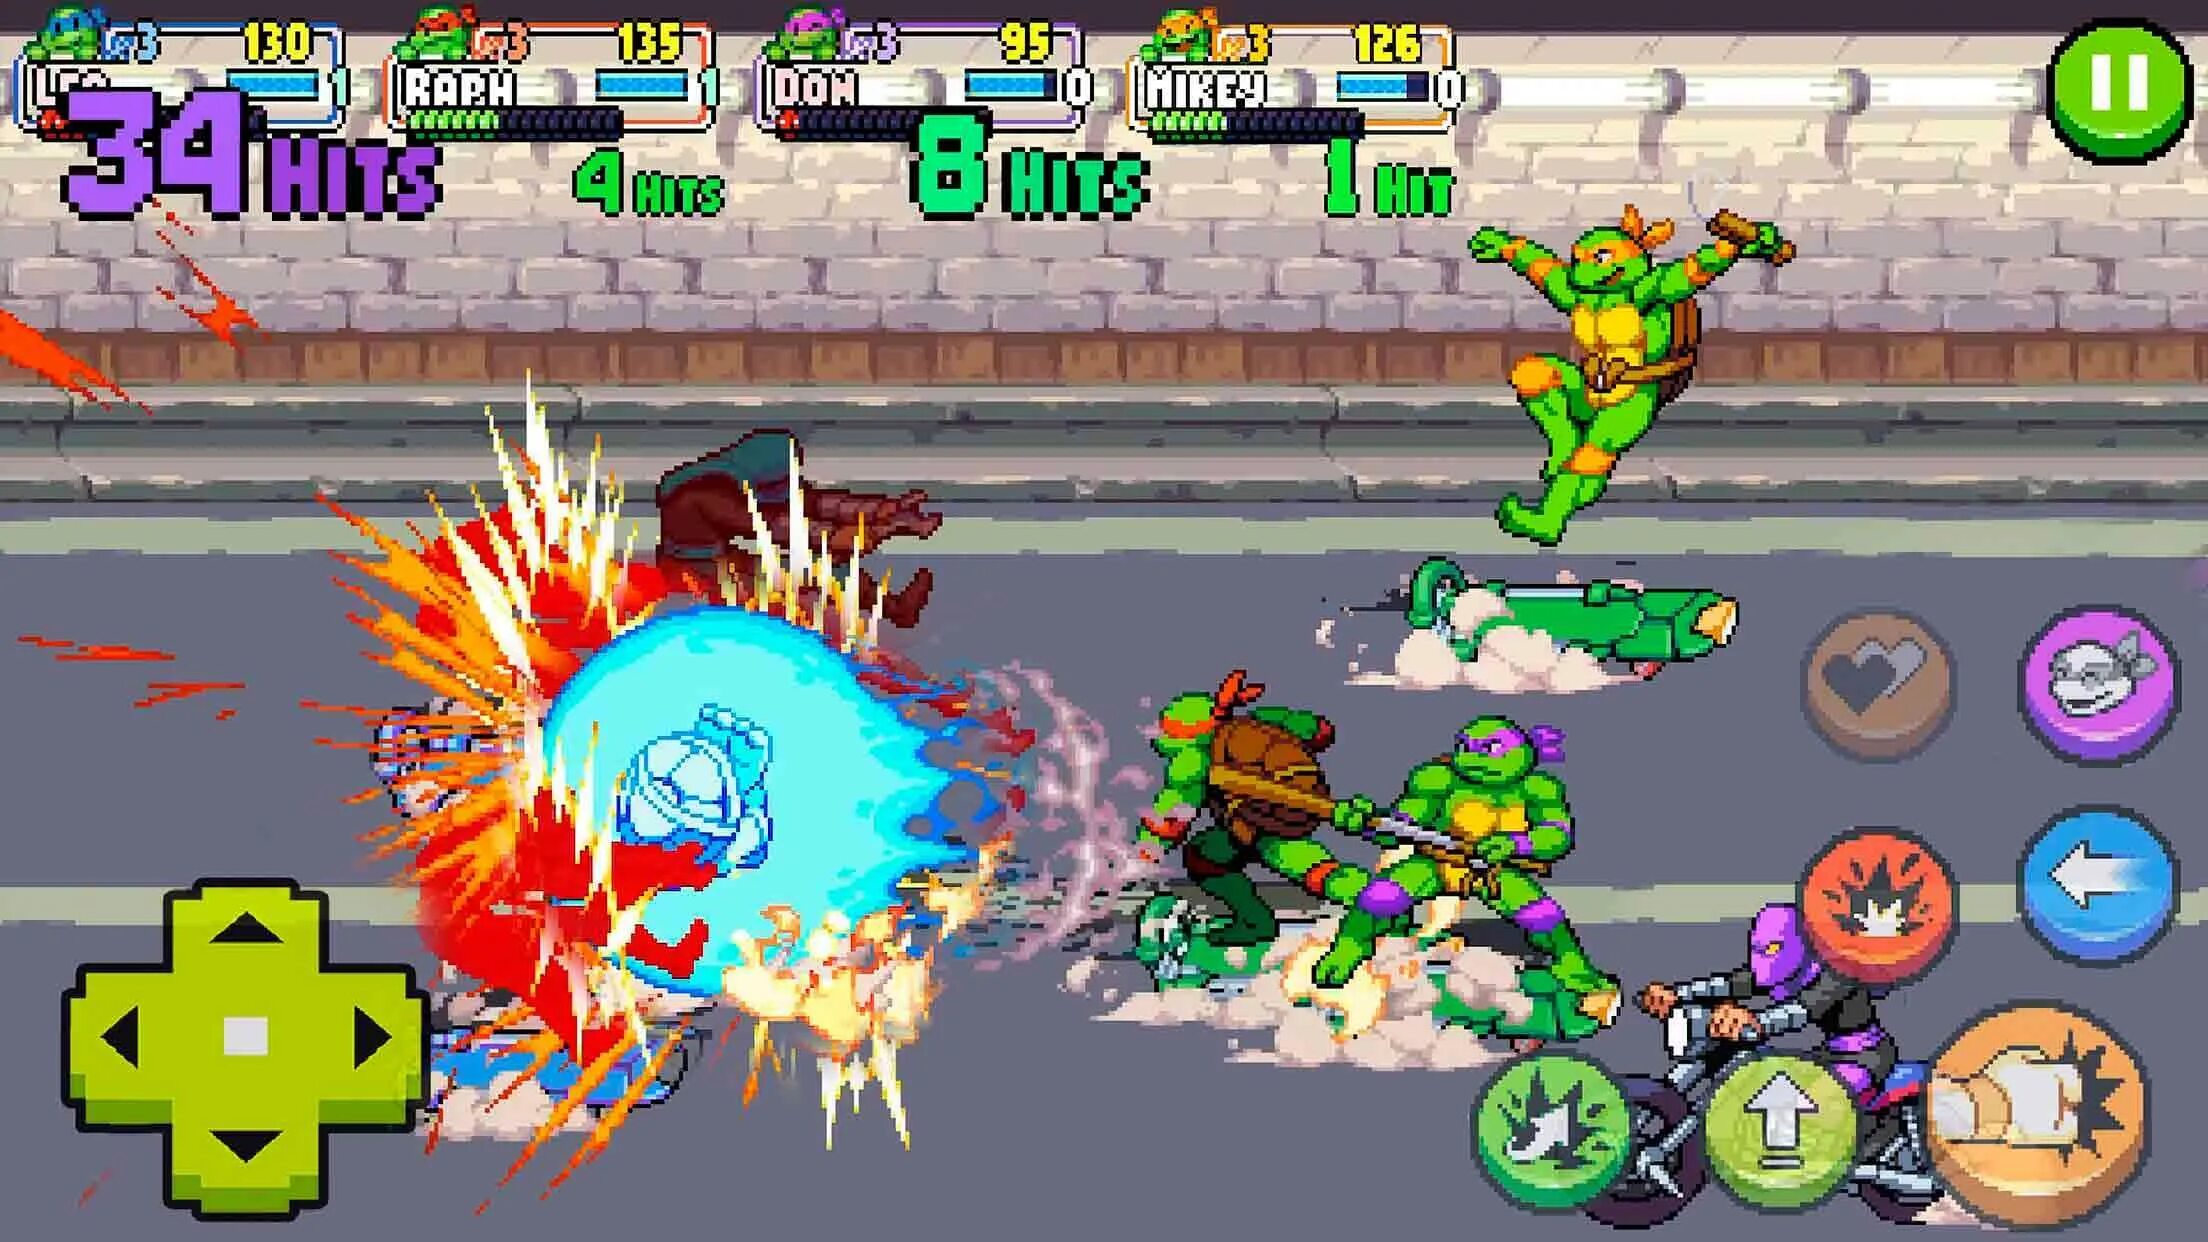 TMNT Shredder Revenge. Teenage Mutant Ninja Turtles (игра, 2003). TMNT Mutant Mayhem Shredder. Черепашки ниндзя игра на Икс бокс. Tmnt shredder revenge на андроид